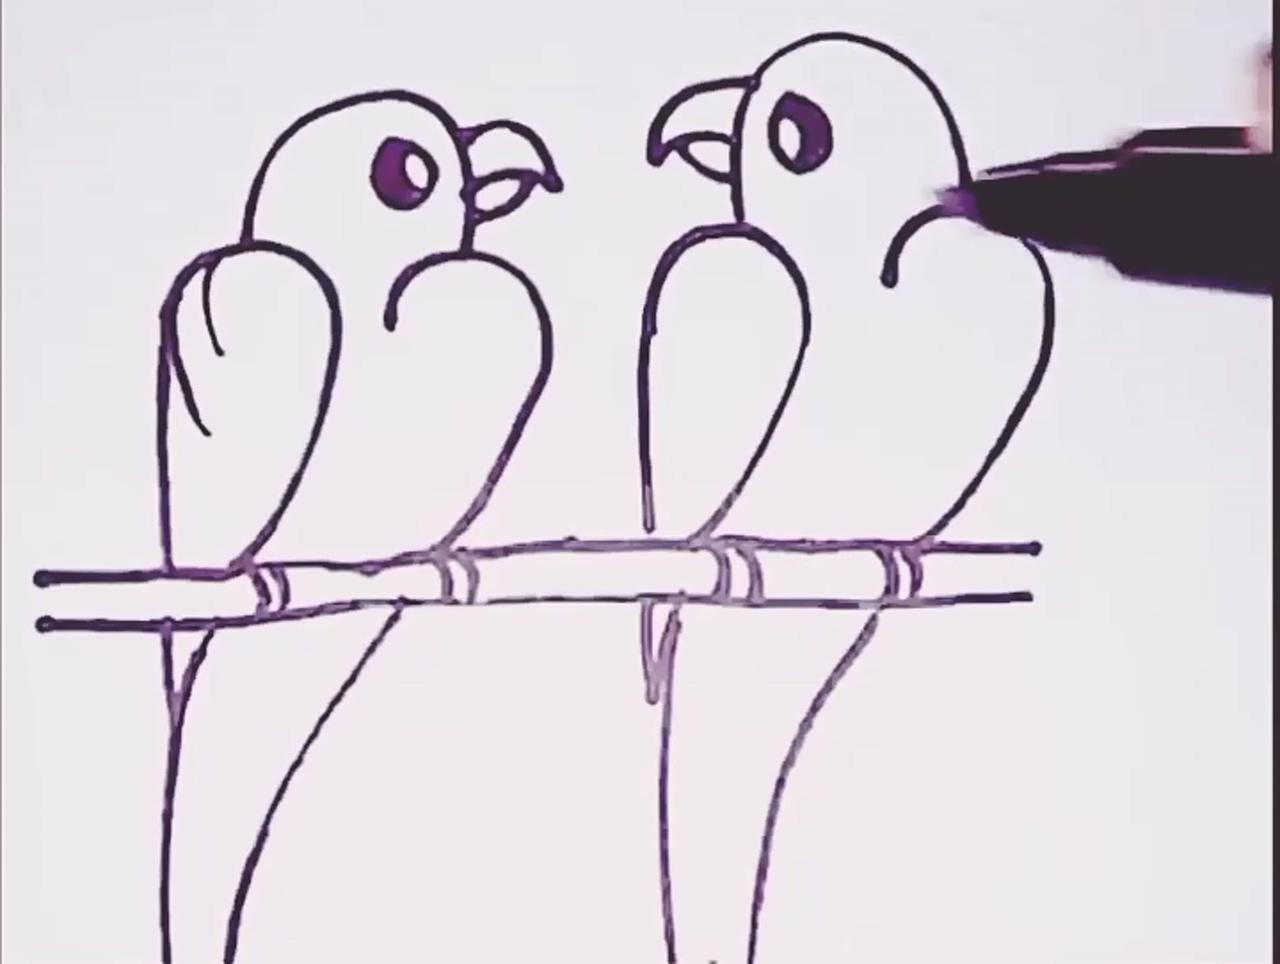 "2222" numbers, drawing love birds; bird drawings